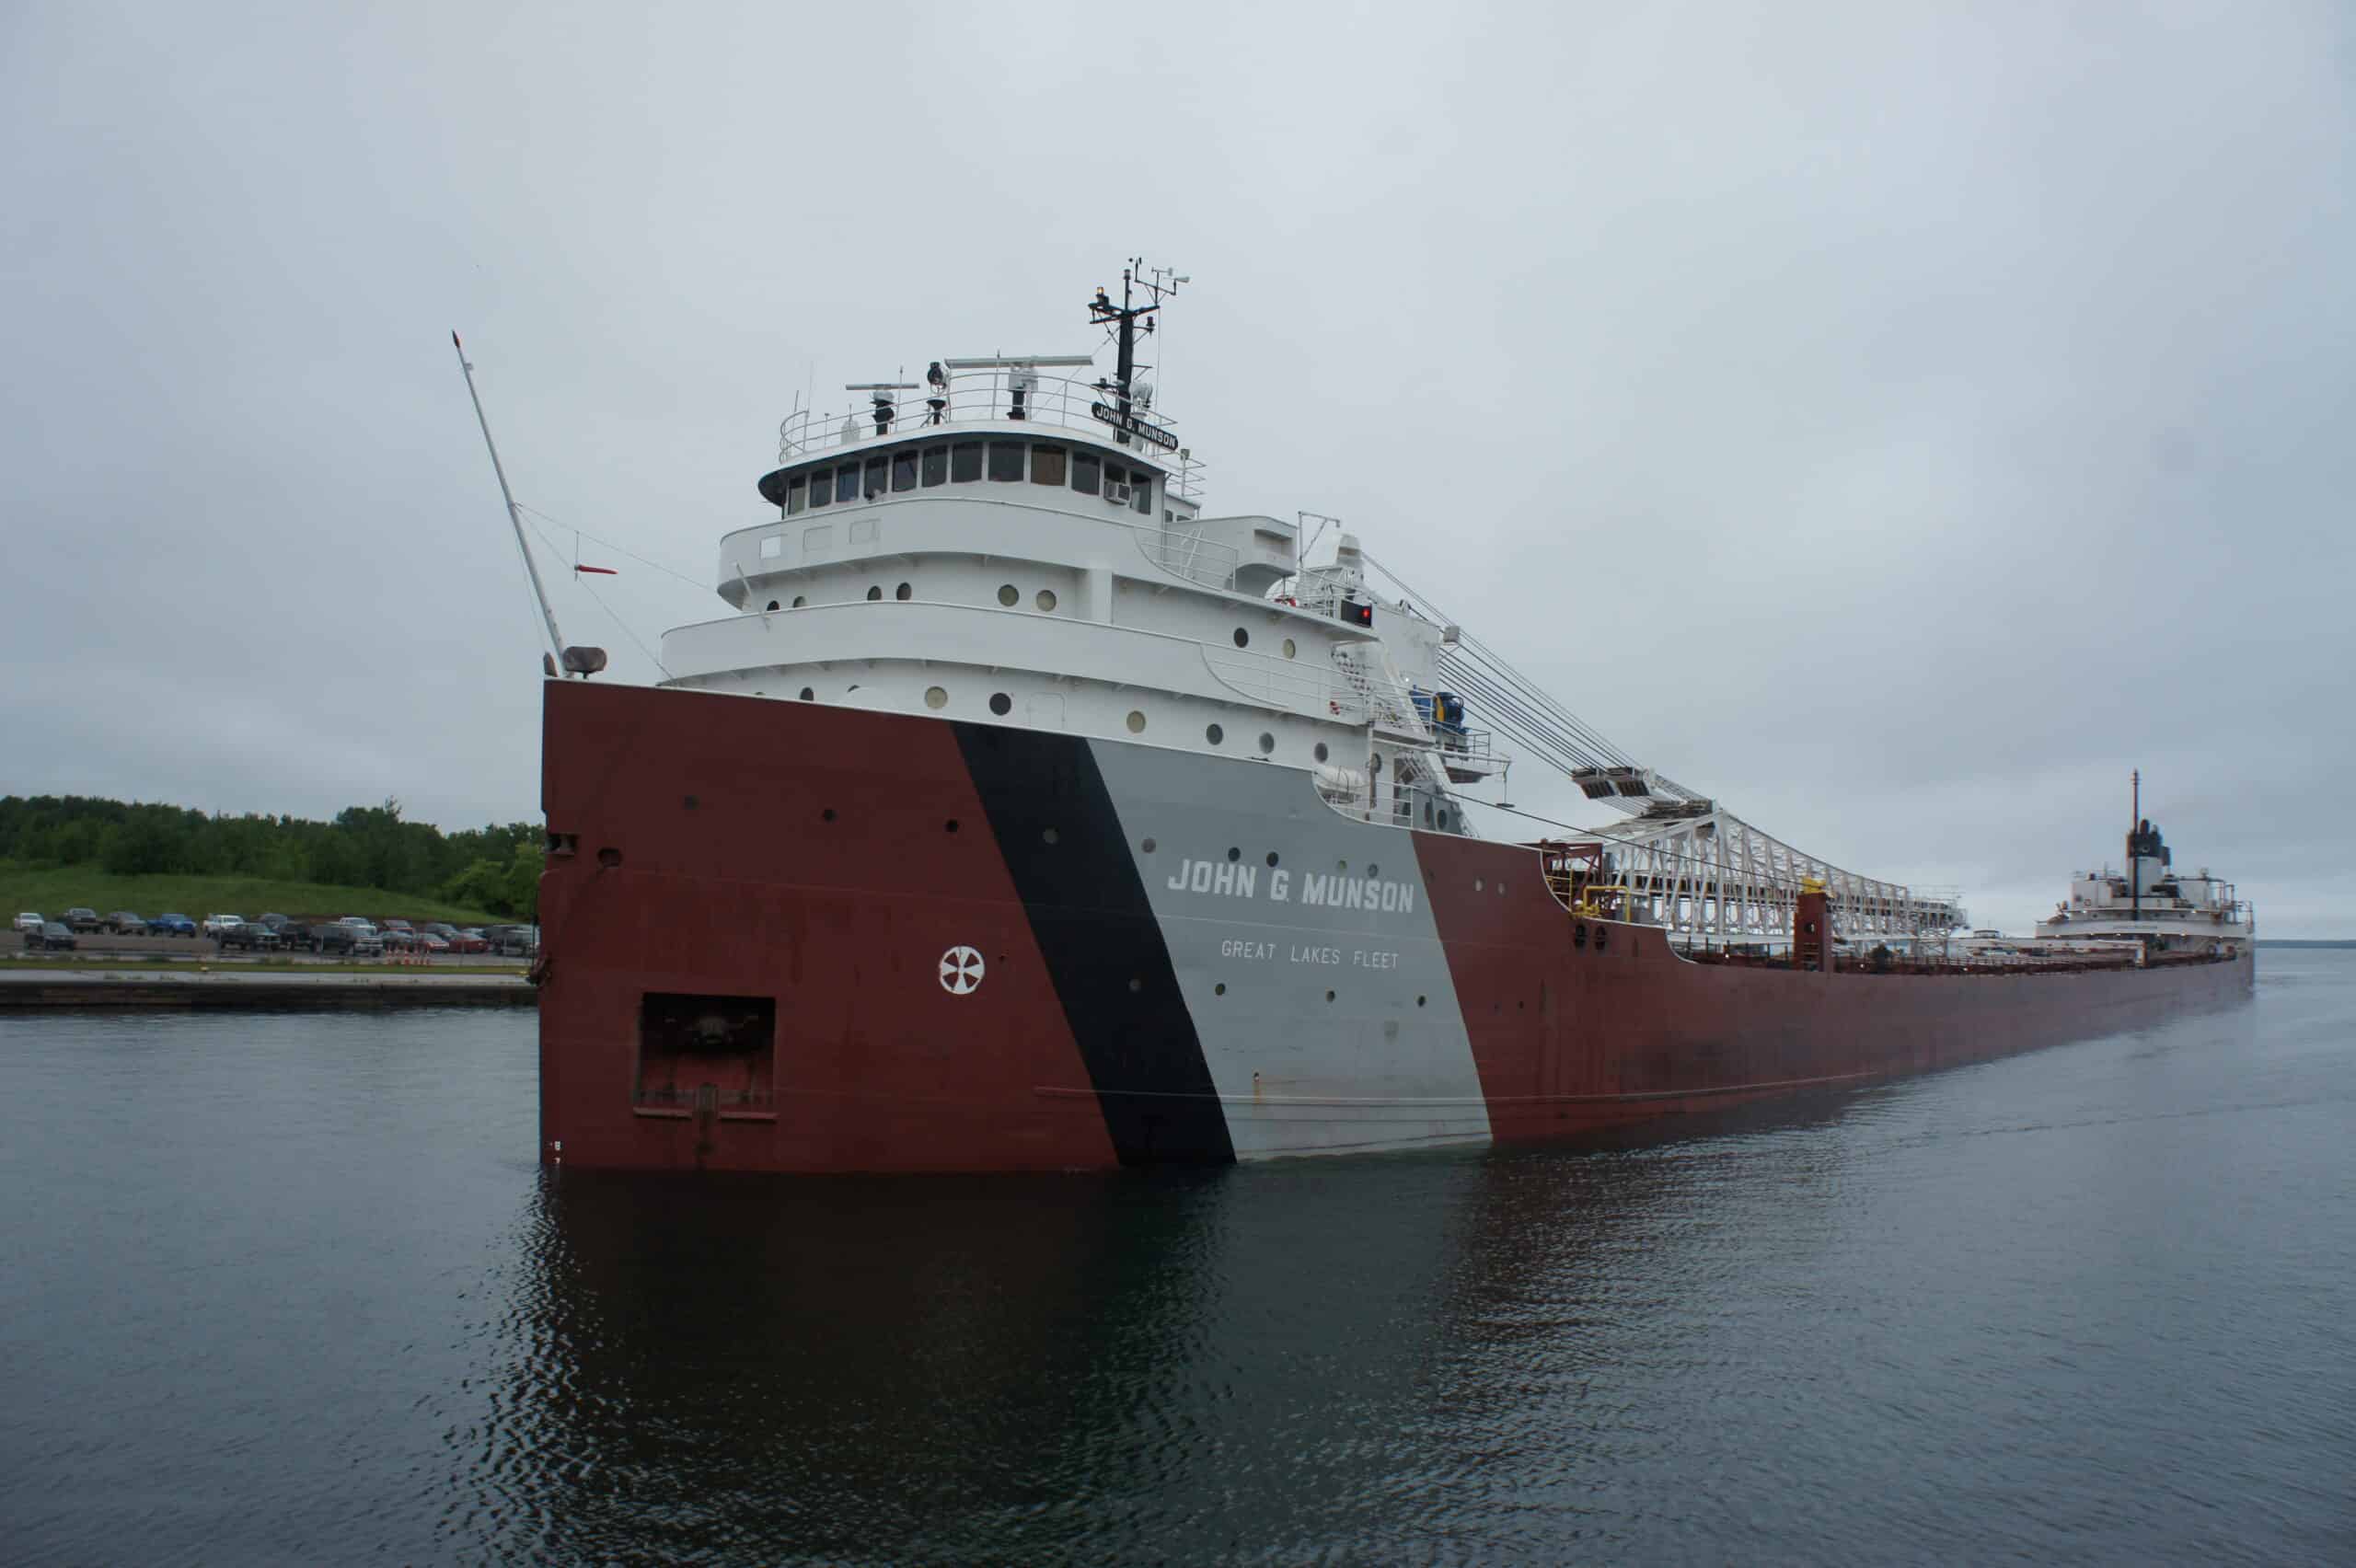 John G Munson Ore Ship home port, Duluth